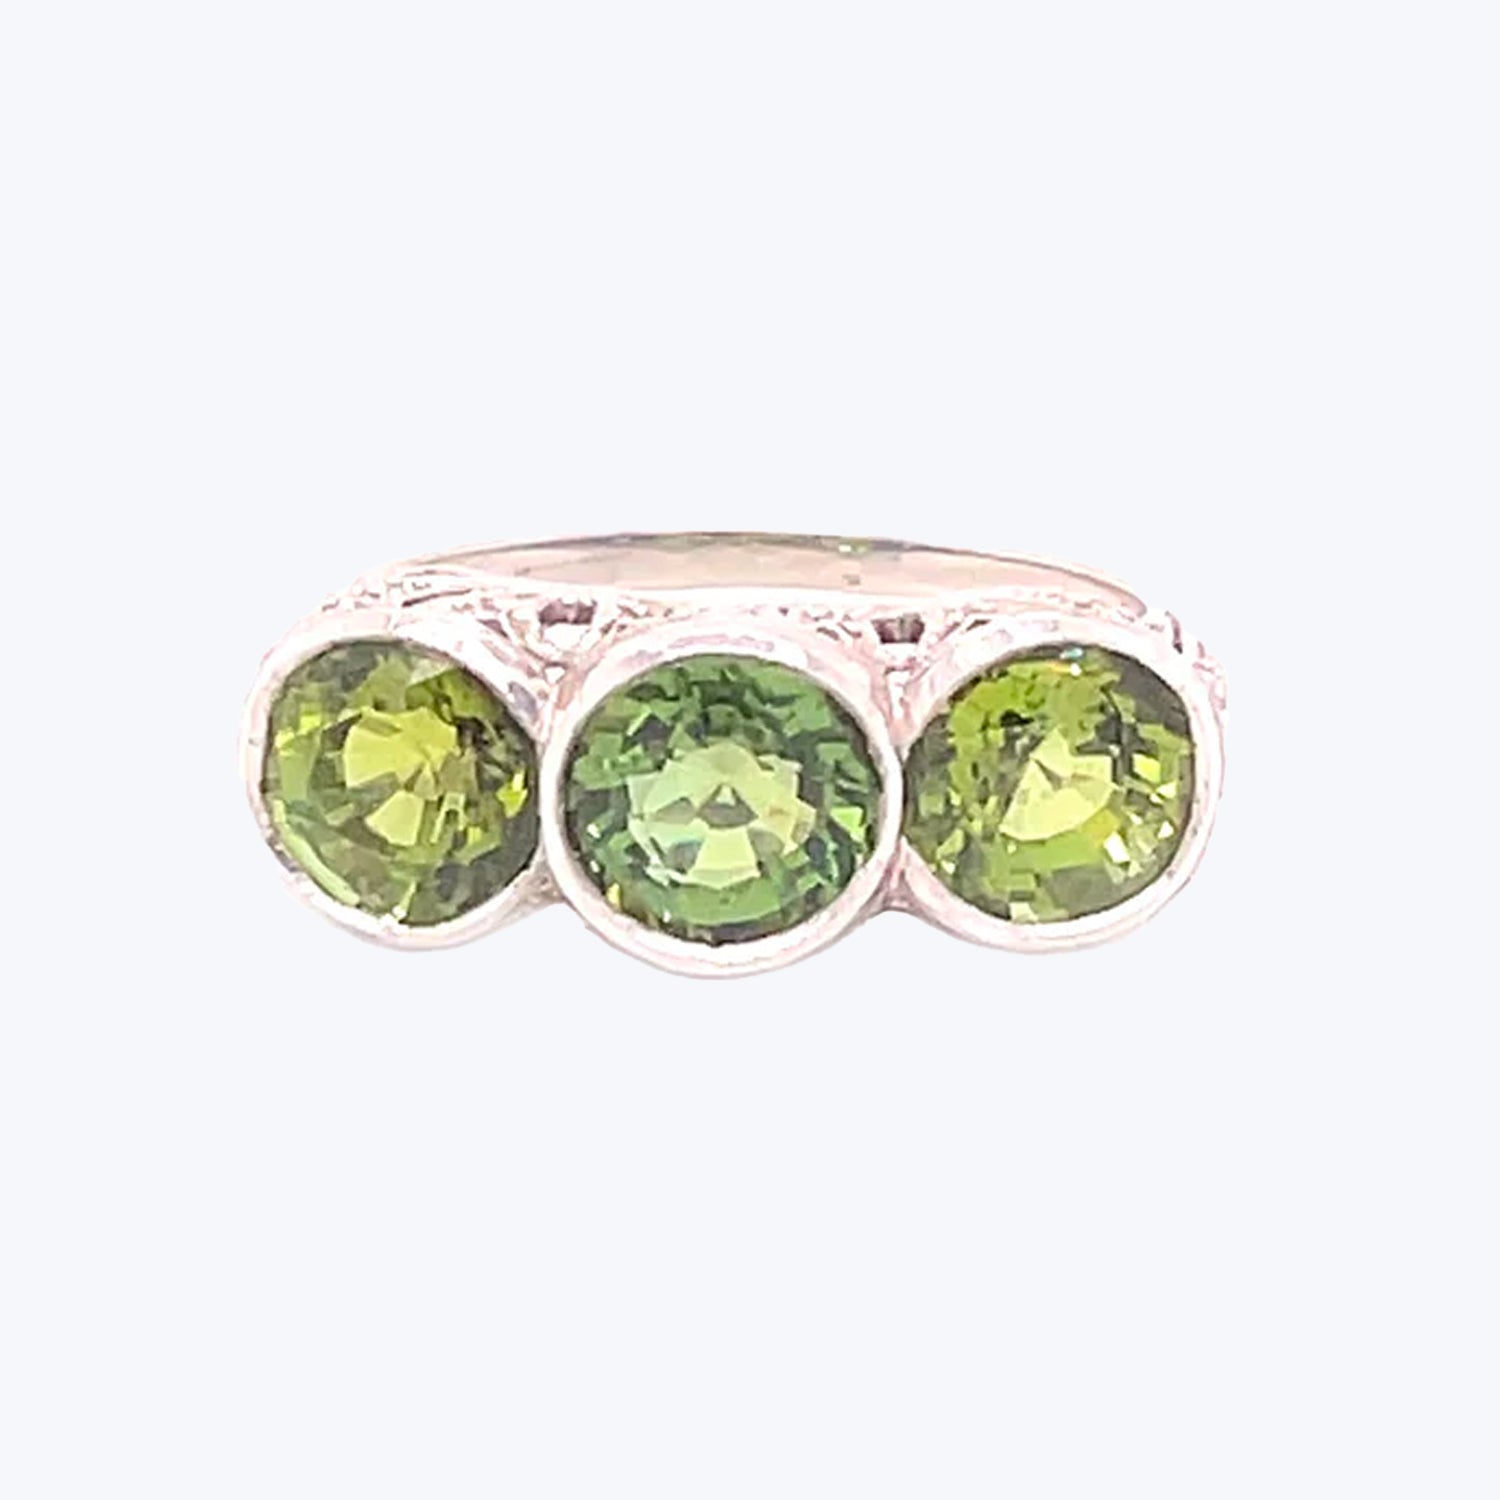 Elegant silver ring with three round-cut green gemstones.